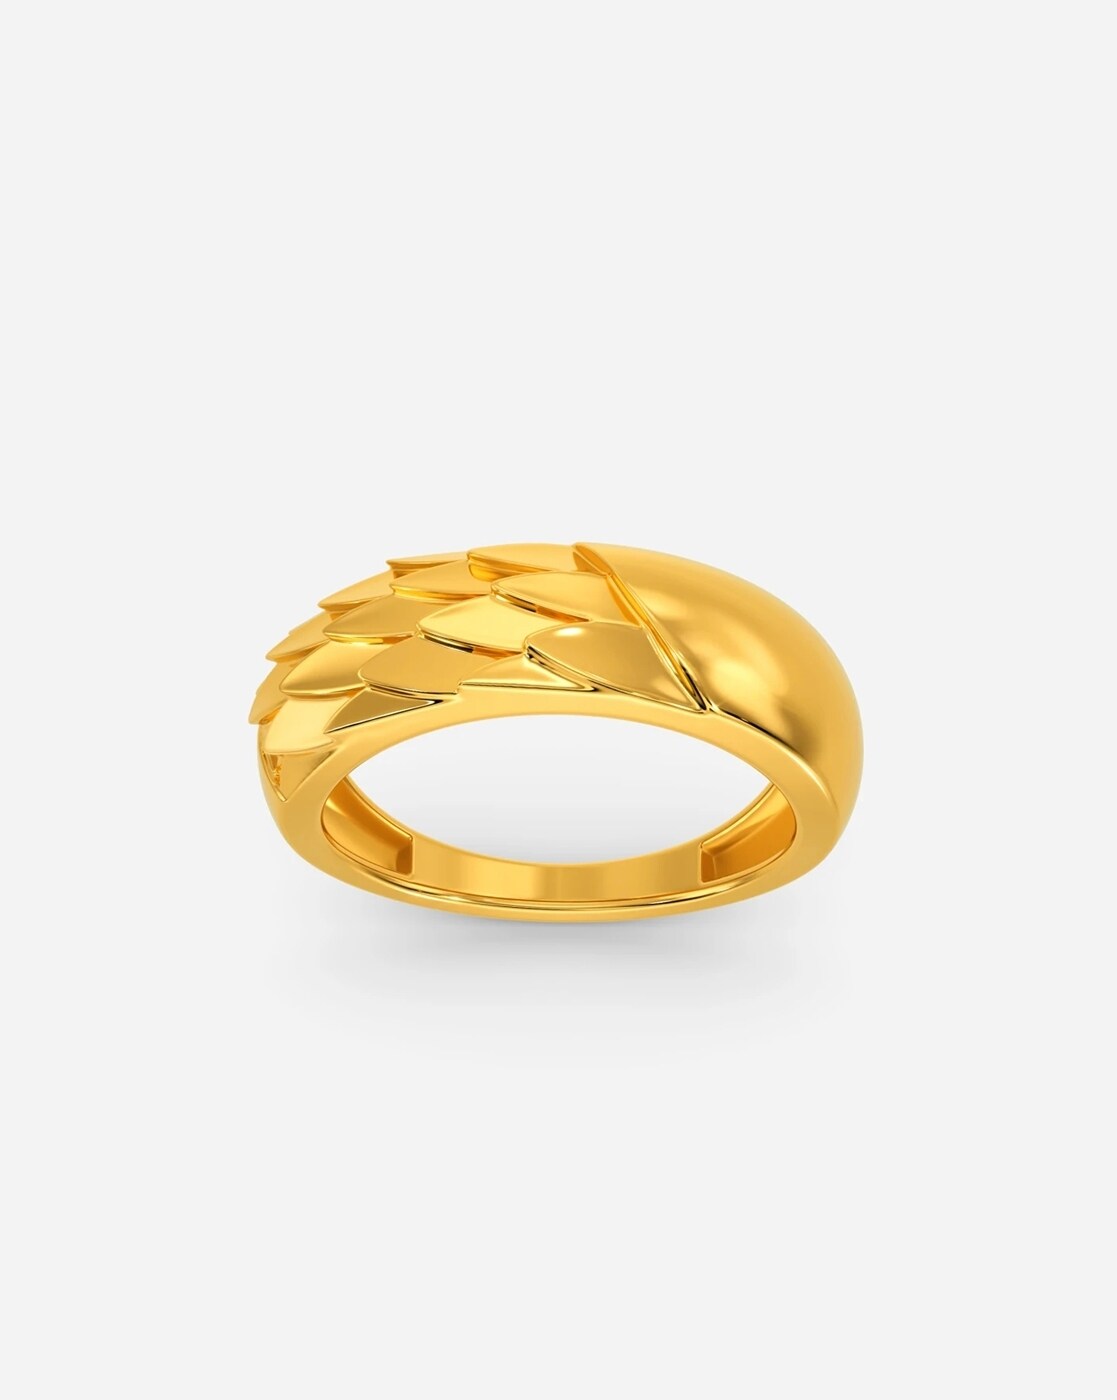 Buy 2 Gram Gold Rings Online | CaratLane